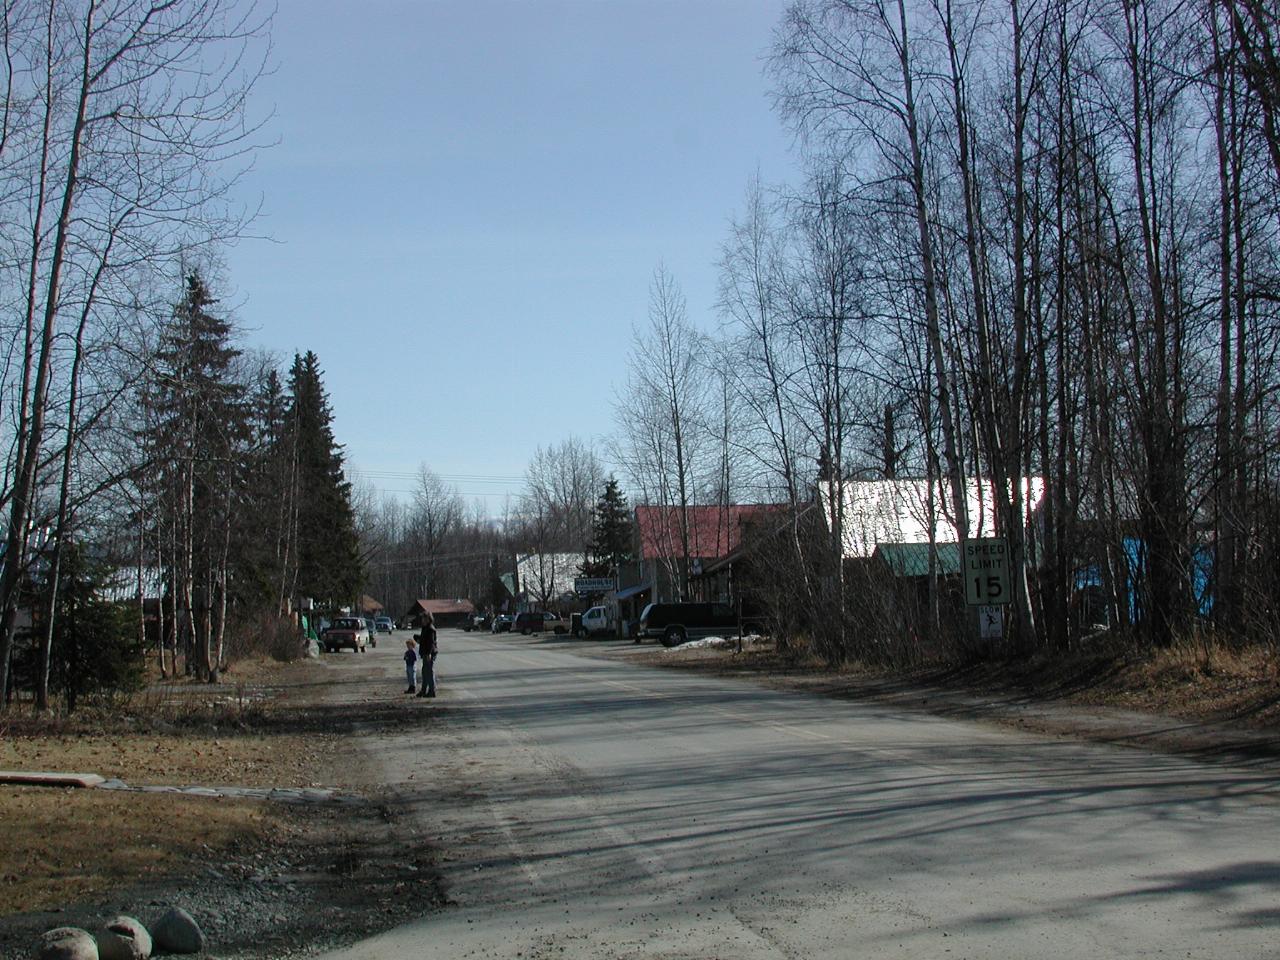 Talkeetna's main street